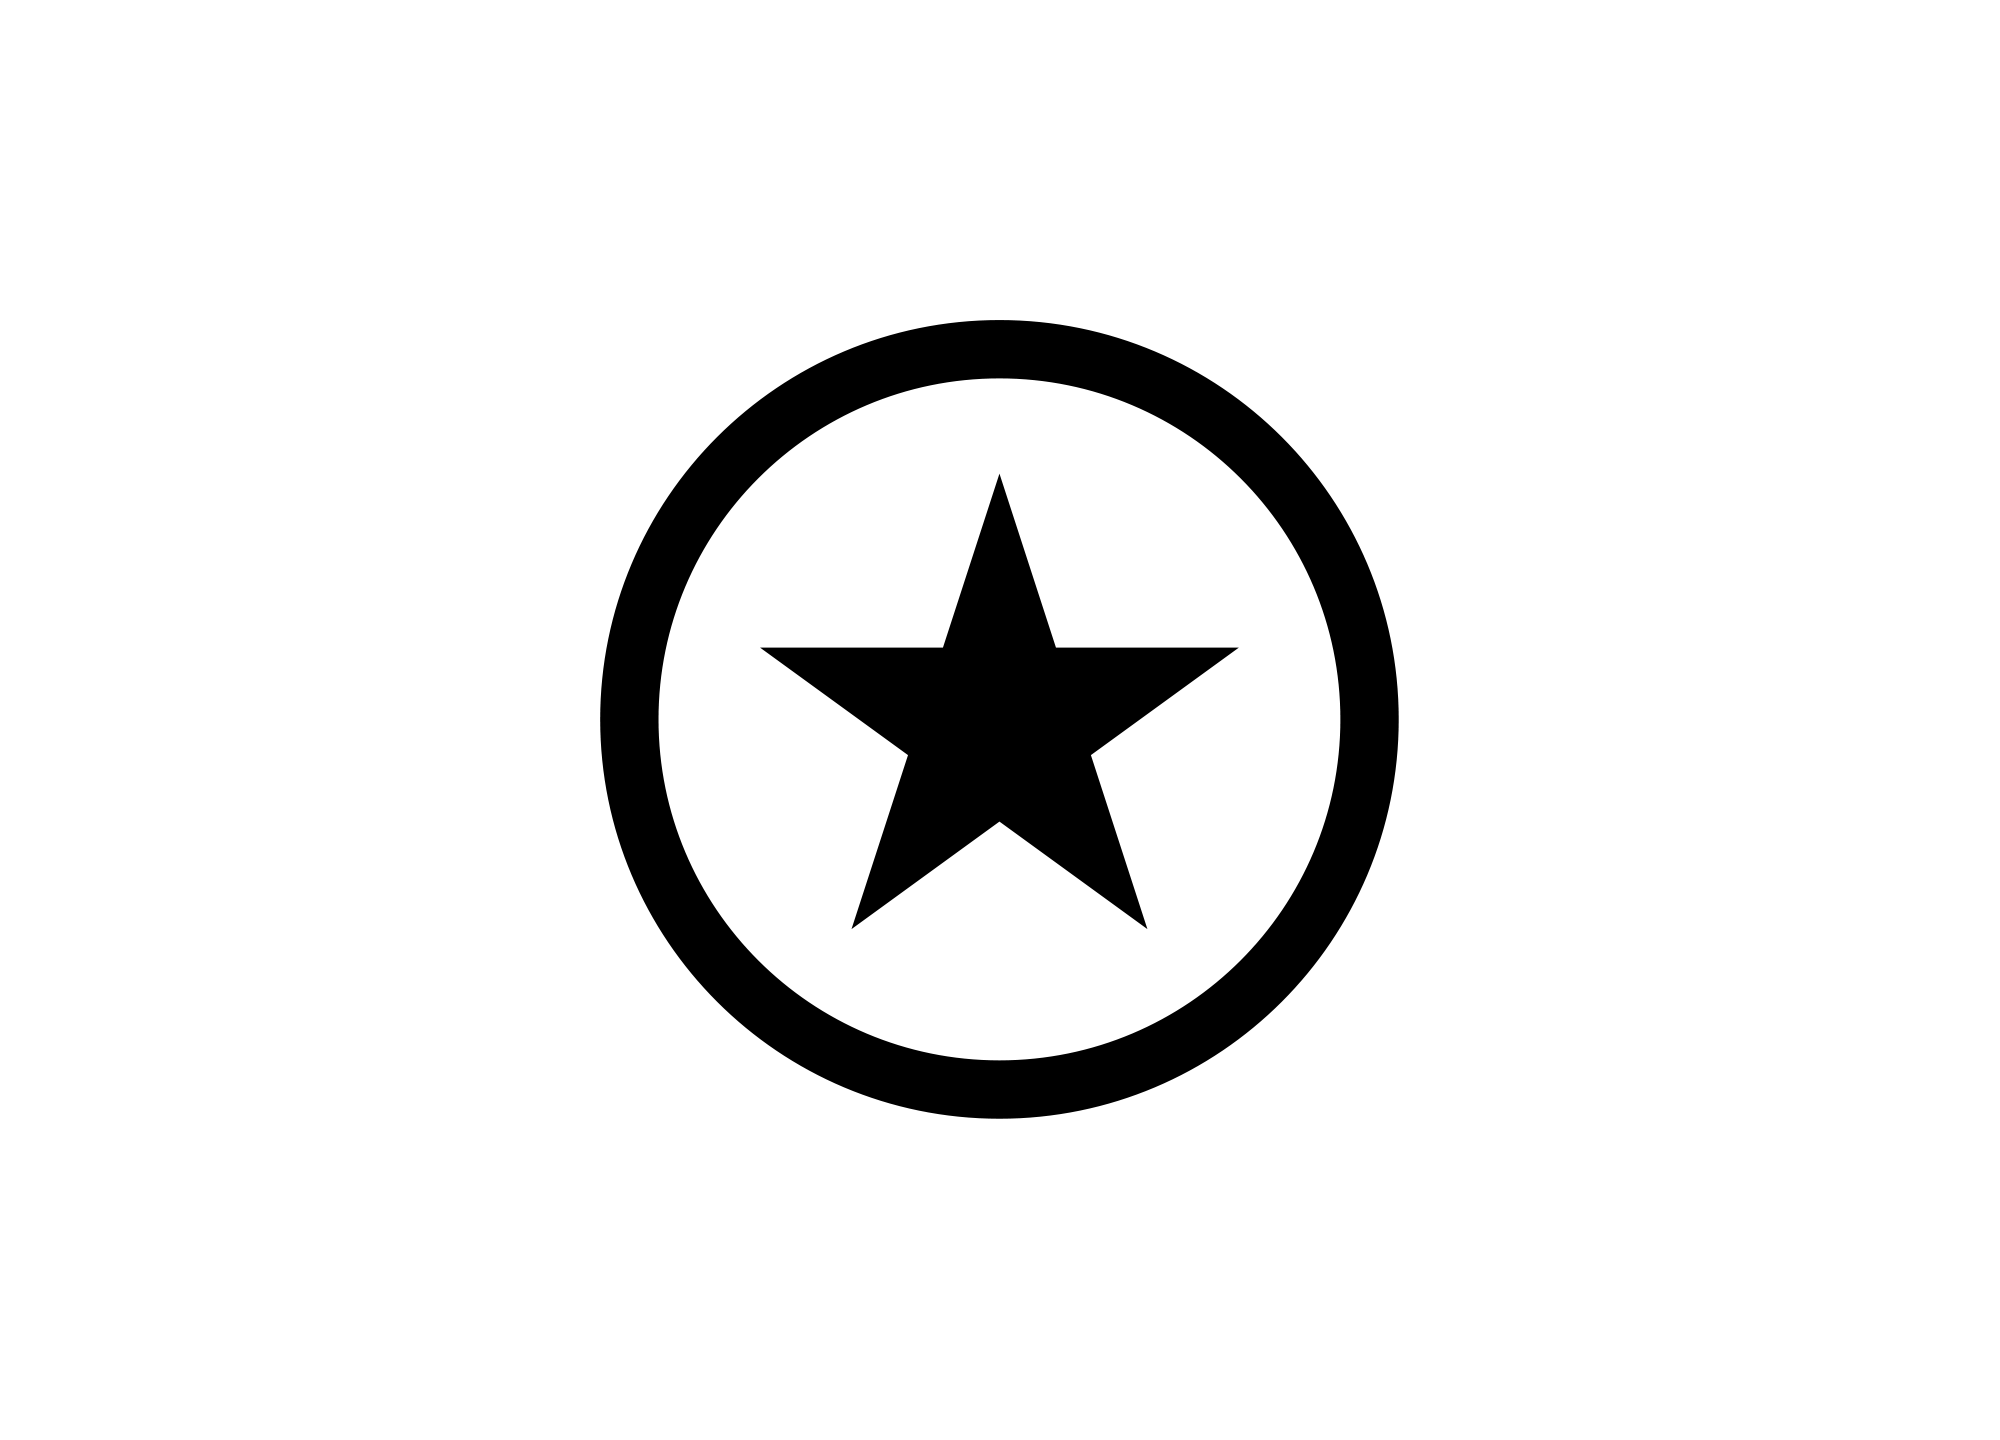  Black  star  Logos 